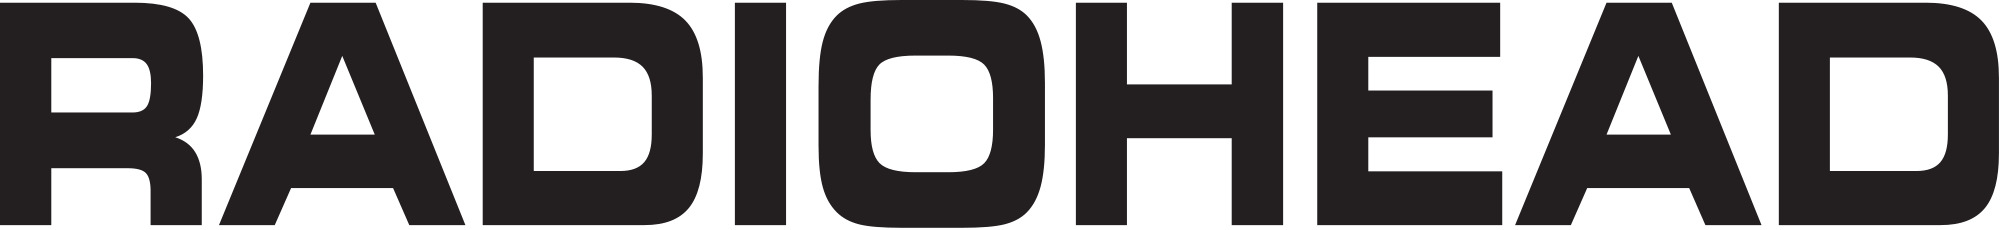 Radiohead Wordmark Logo png icons